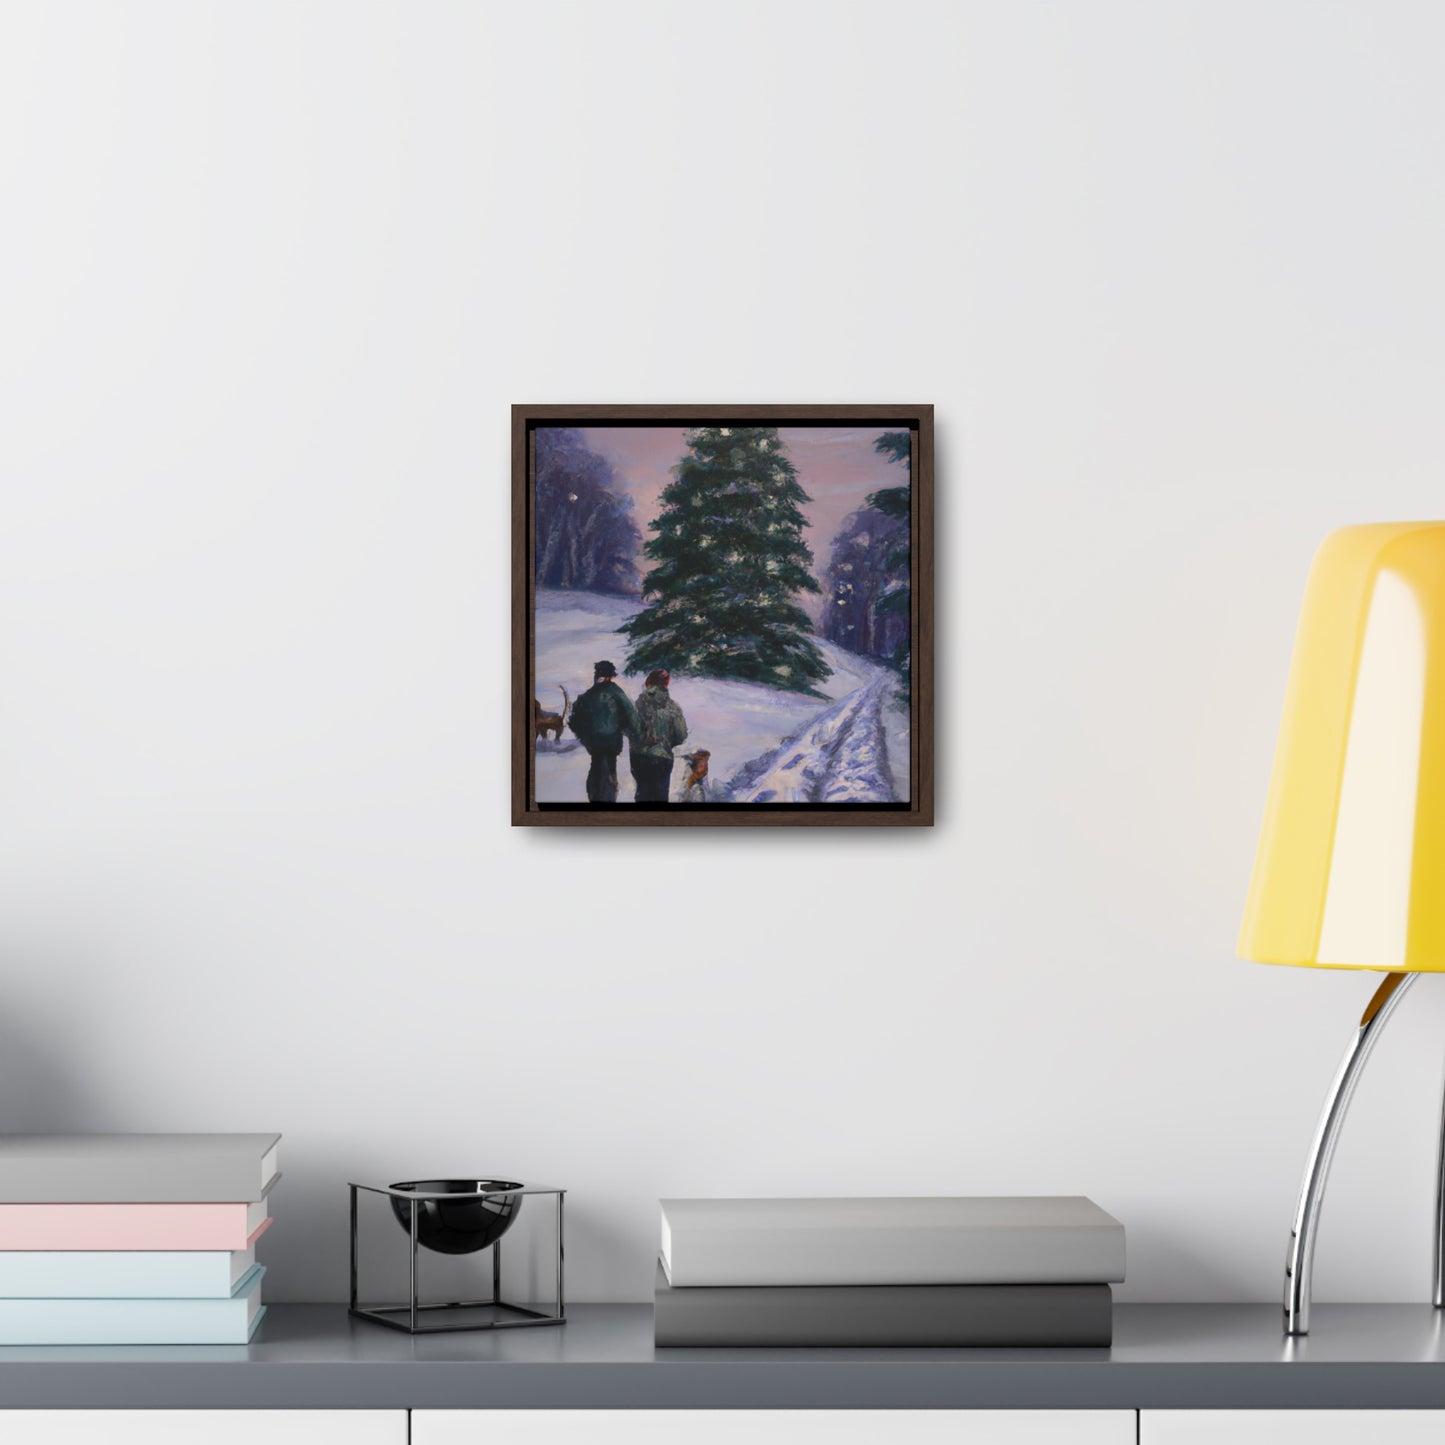 The Christmas Tree Hunt - Canvas Wall Art: Jacques Yulewood - Christmas Wall Decor, Framed Wall Art Print